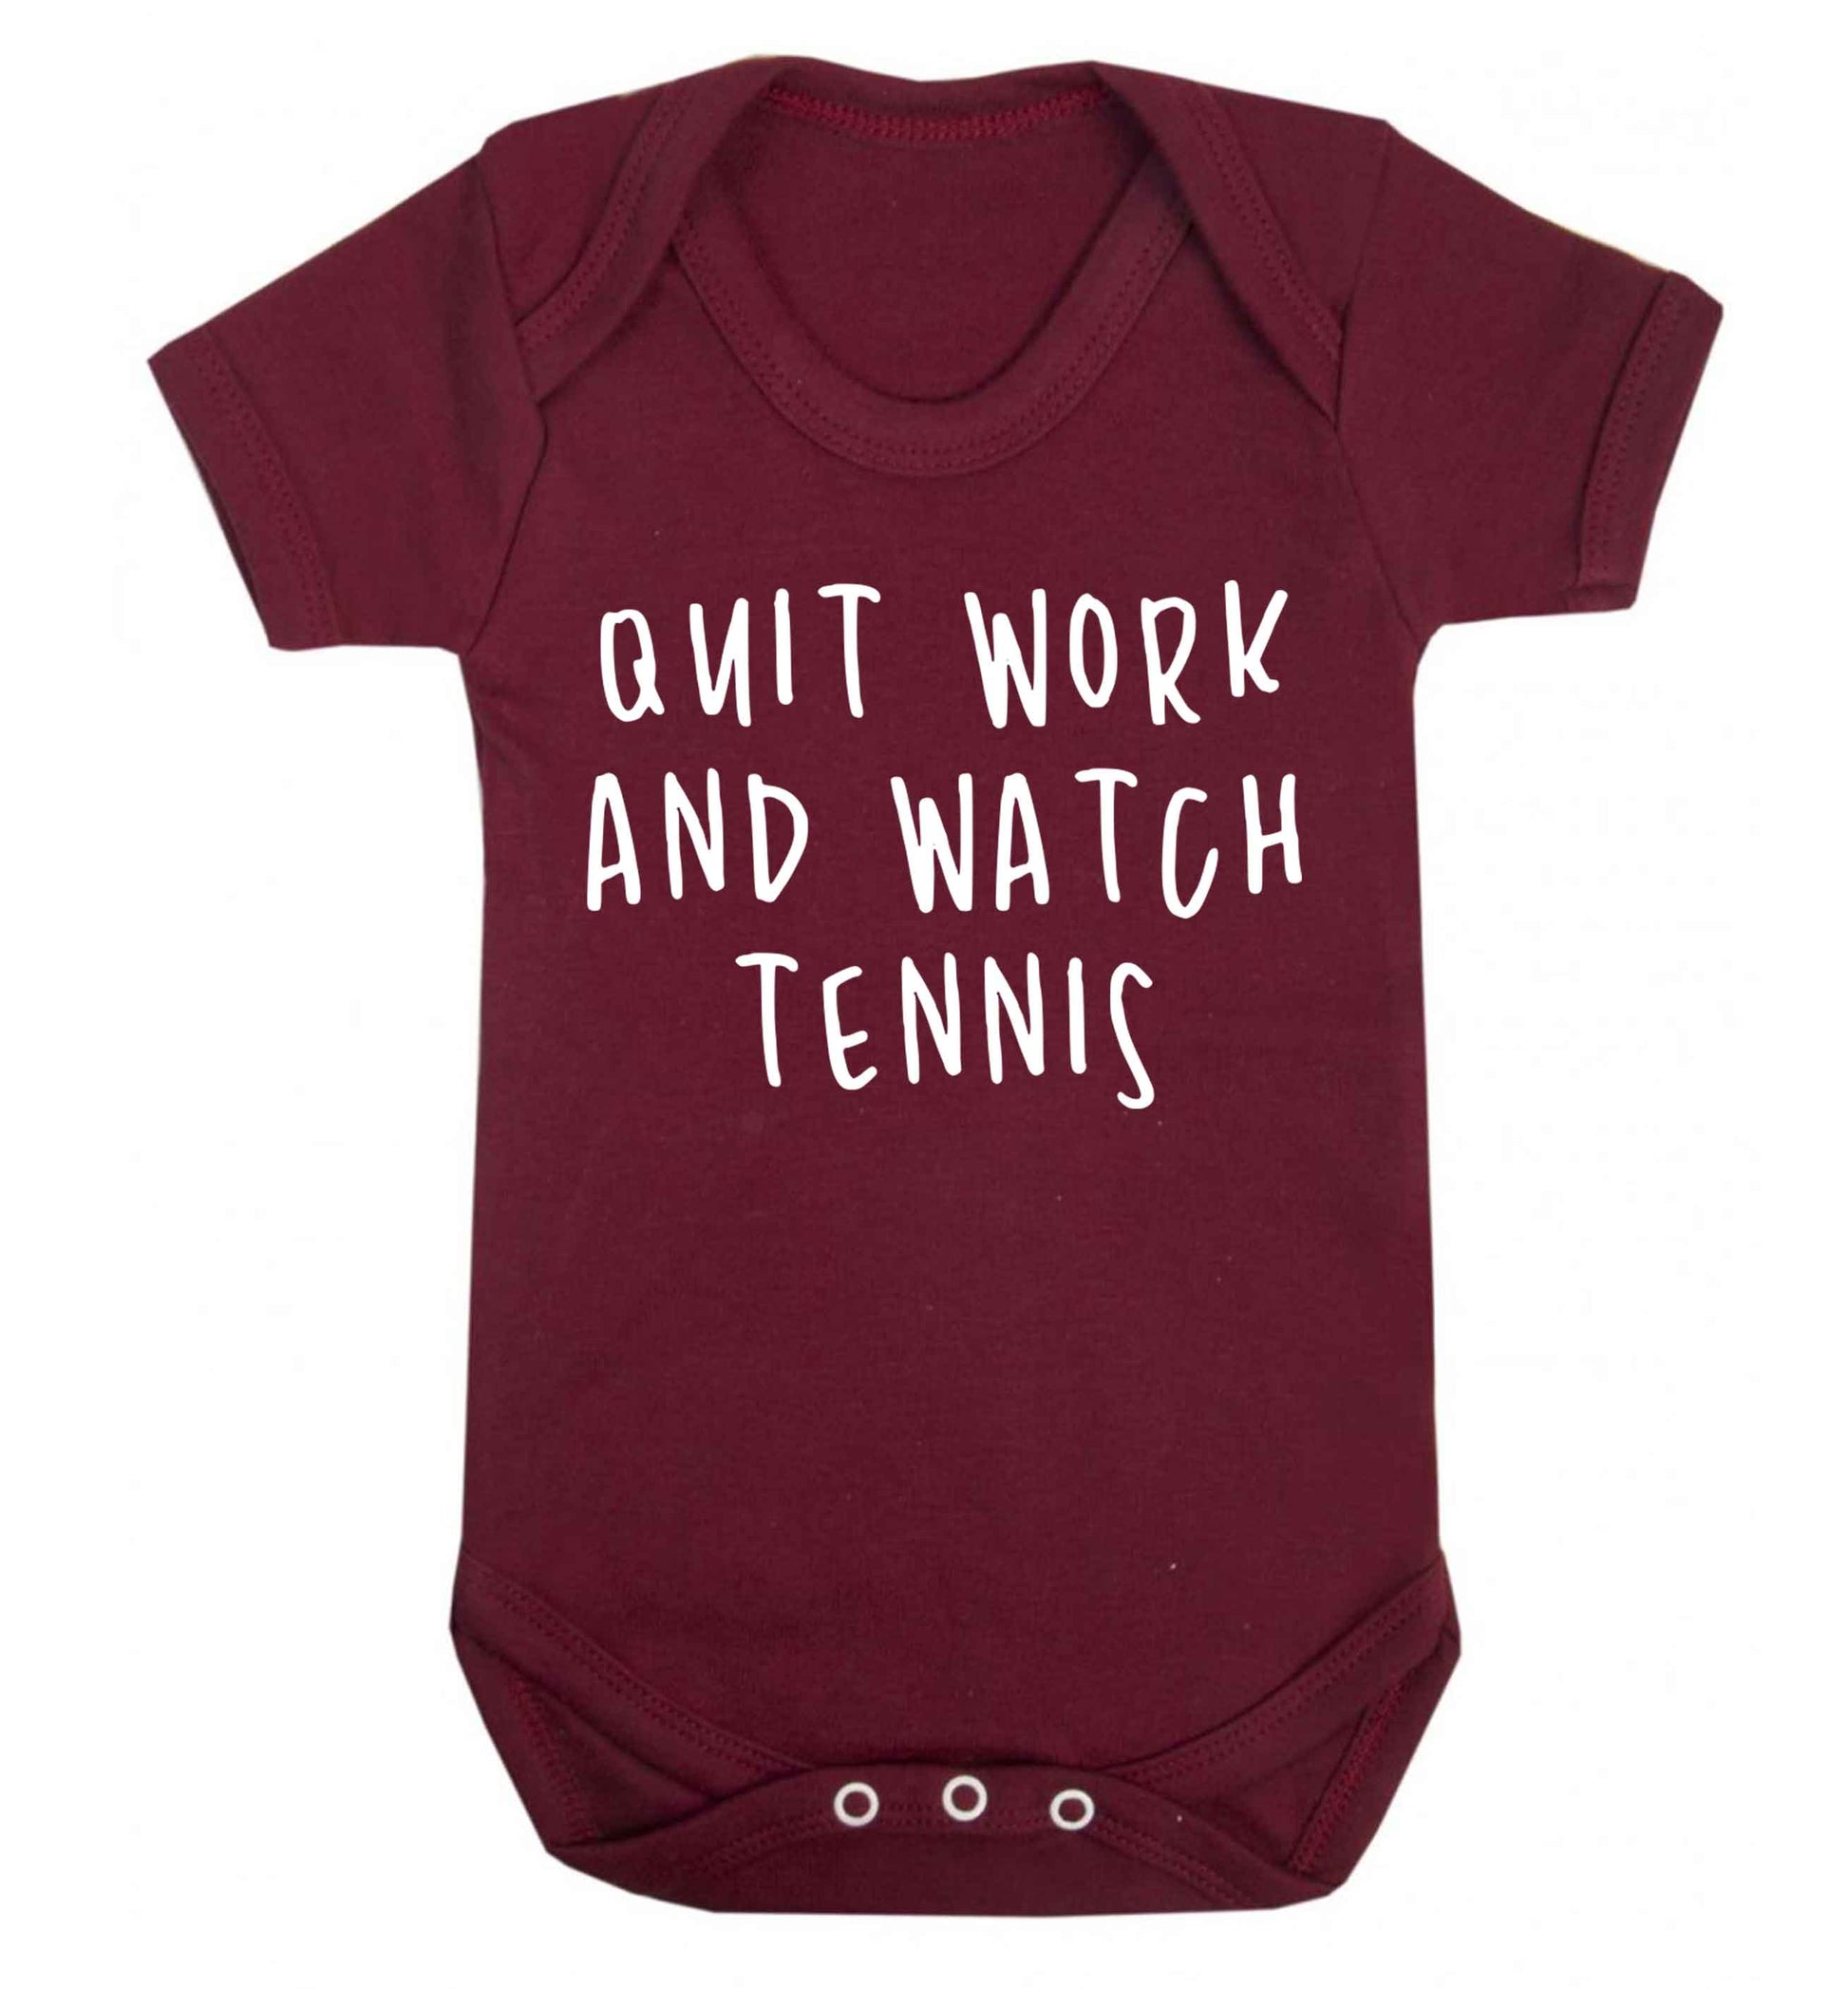 Quit work and watch tennis Baby Vest maroon 18-24 months